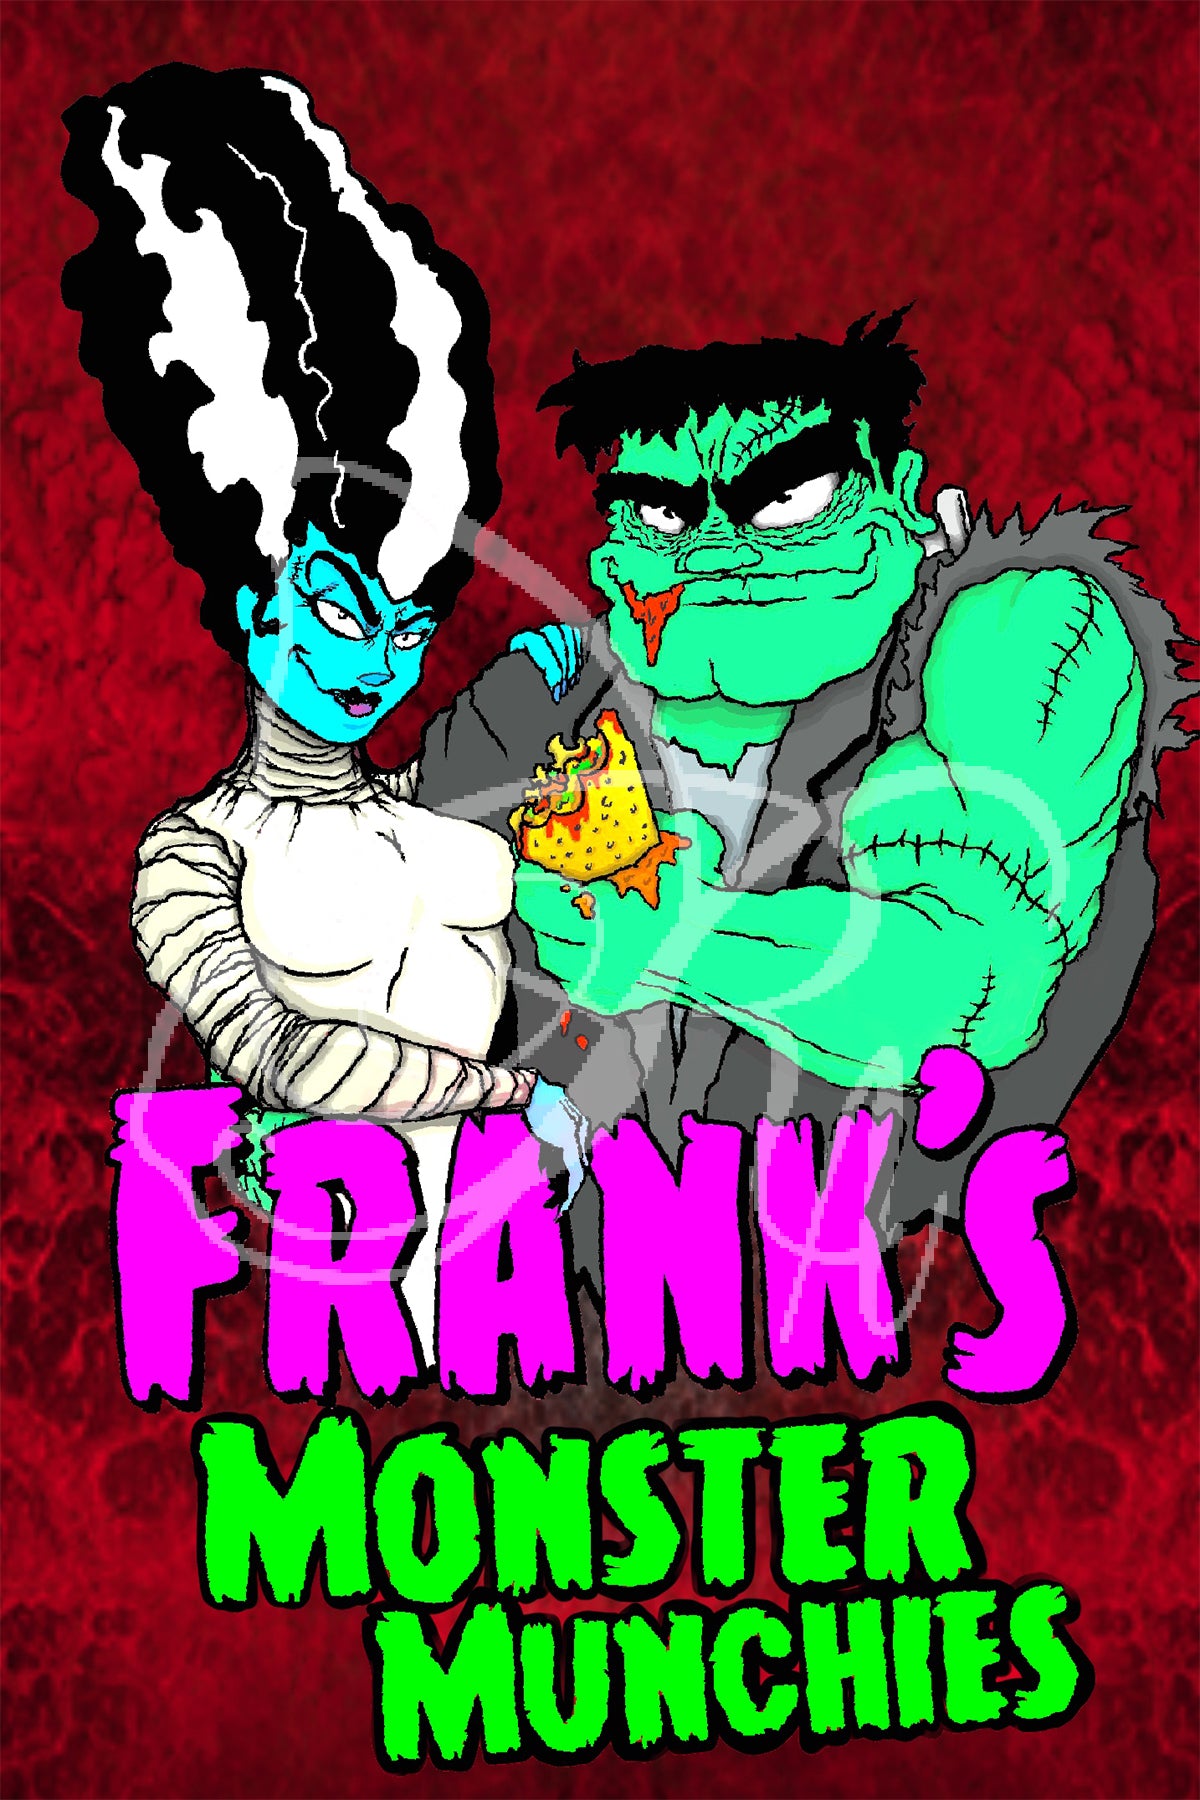 Frank's Monster Munchies Tumblers